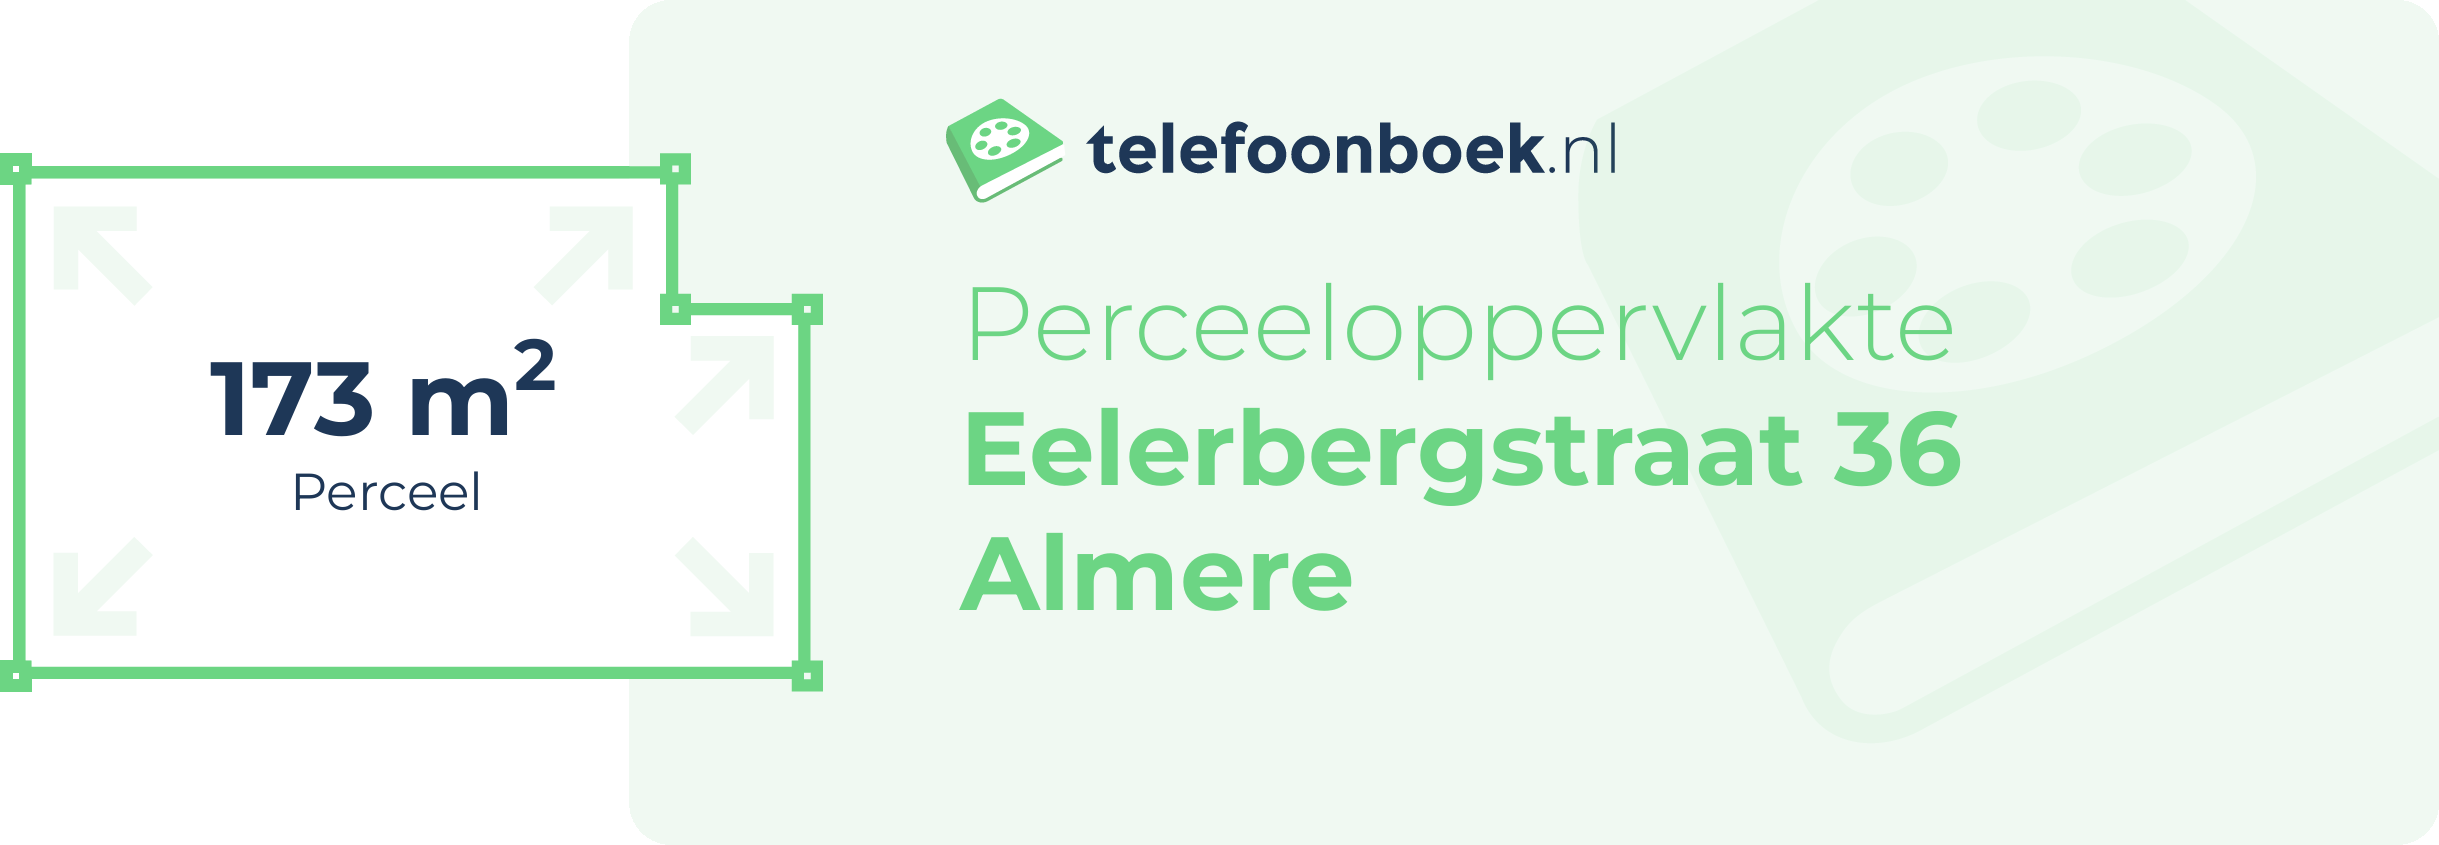 Perceeloppervlakte Eelerbergstraat 36 Almere